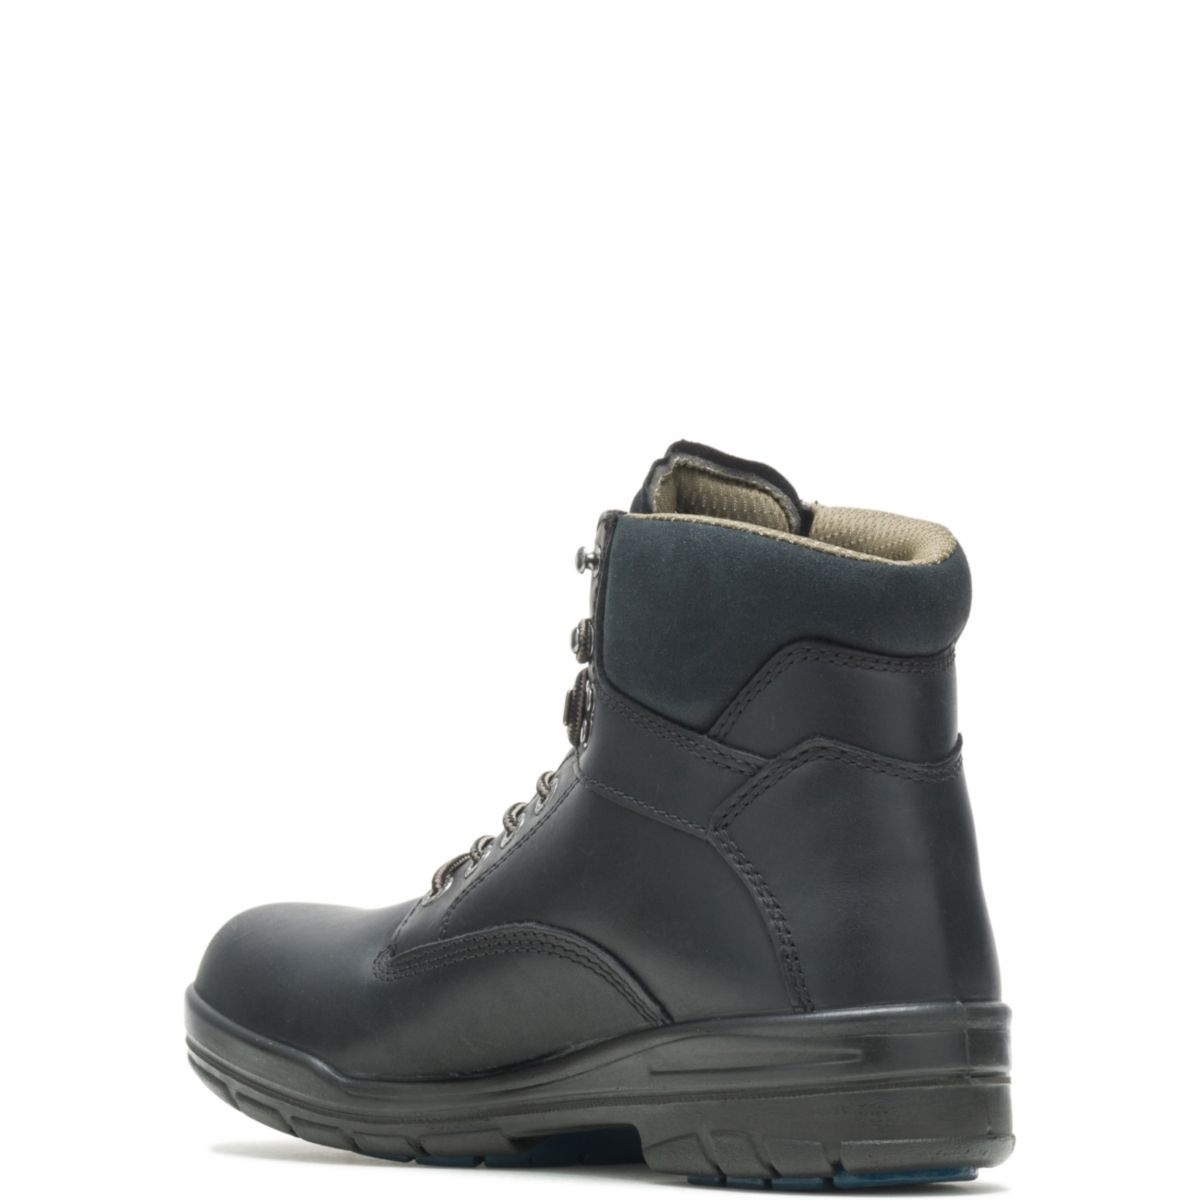 WOLVERINE Men's 6 DuraShocksÂ® Slip Resistant Direct-Attached Lined Soft Toe Work Boot Black - W03123 14 WIDE BLACK - BLACK, 10.5 Wide